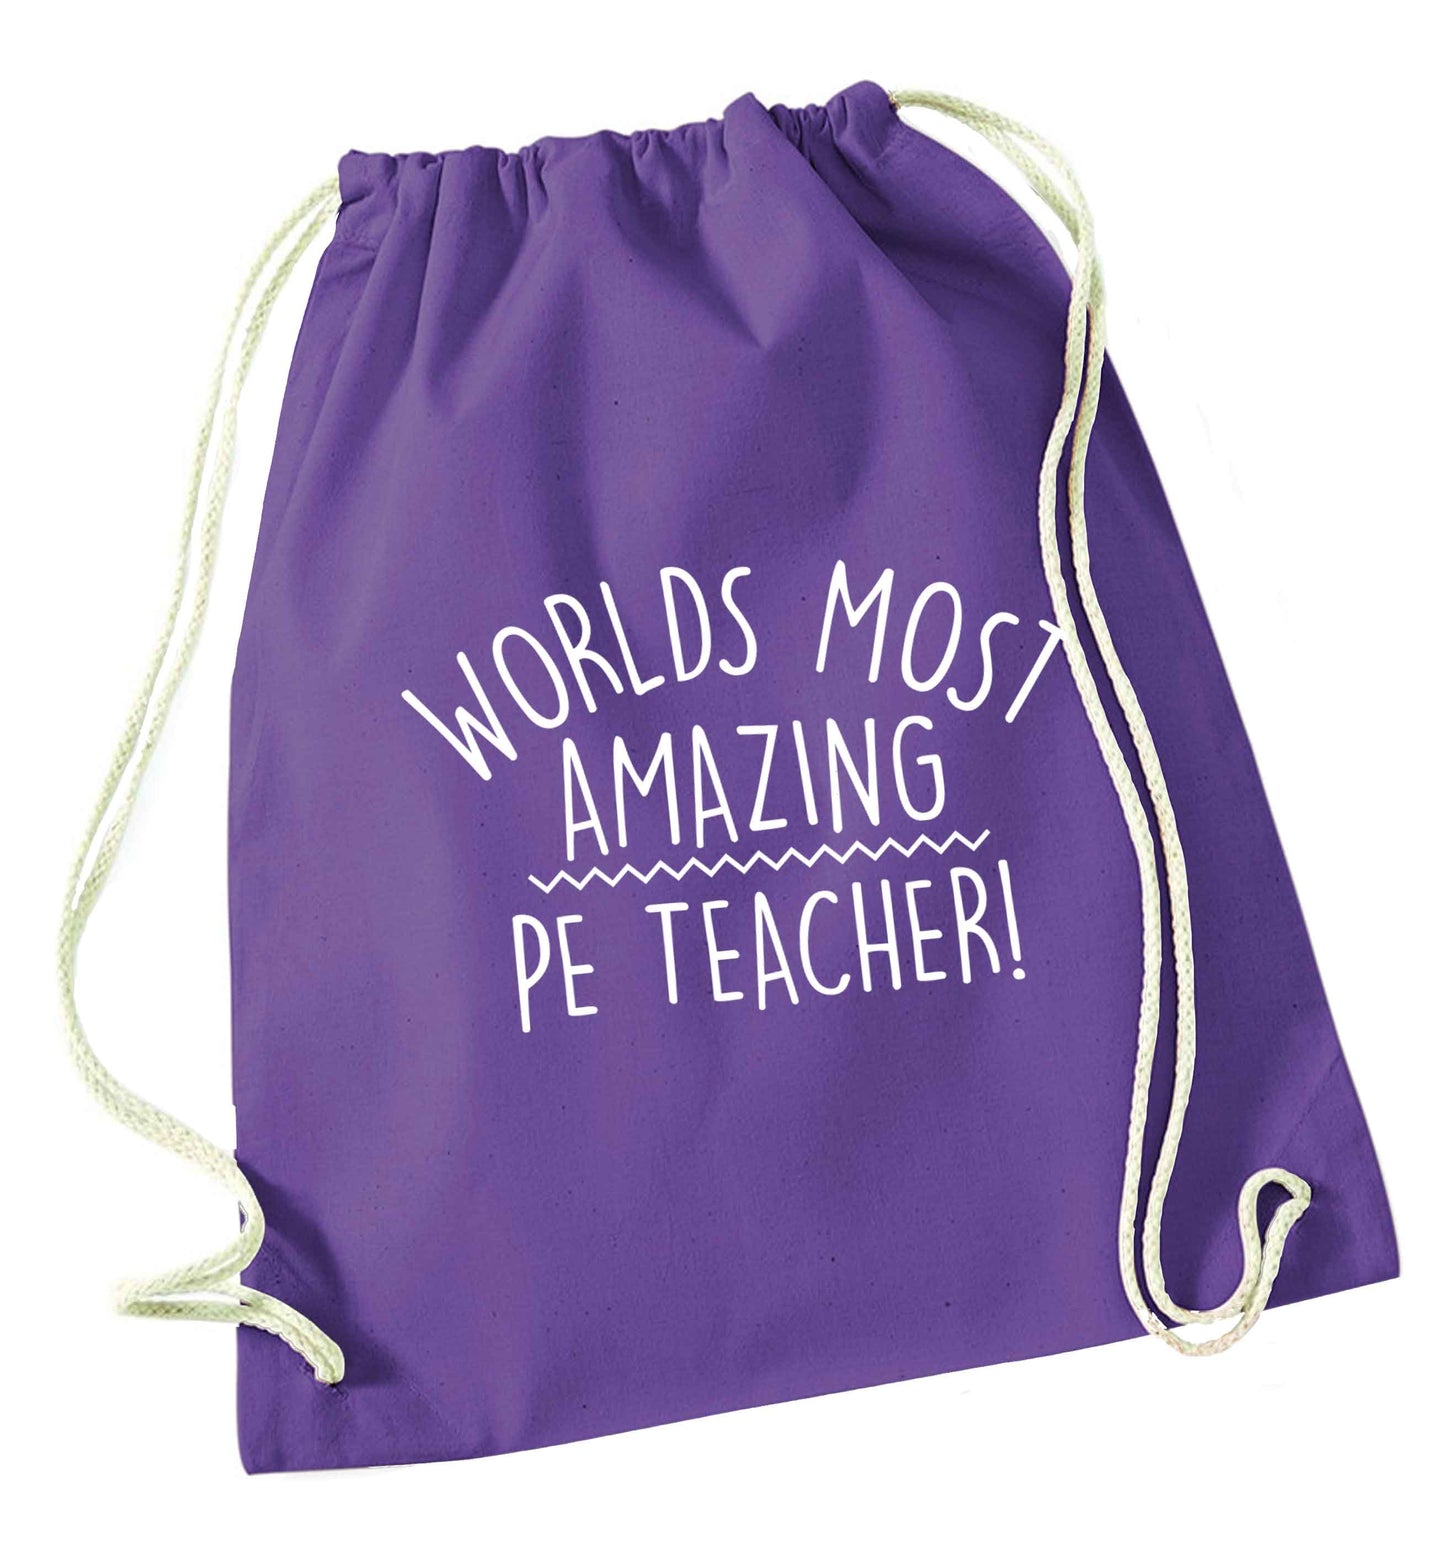 Worlds most amazing PE teacher purple drawstring bag